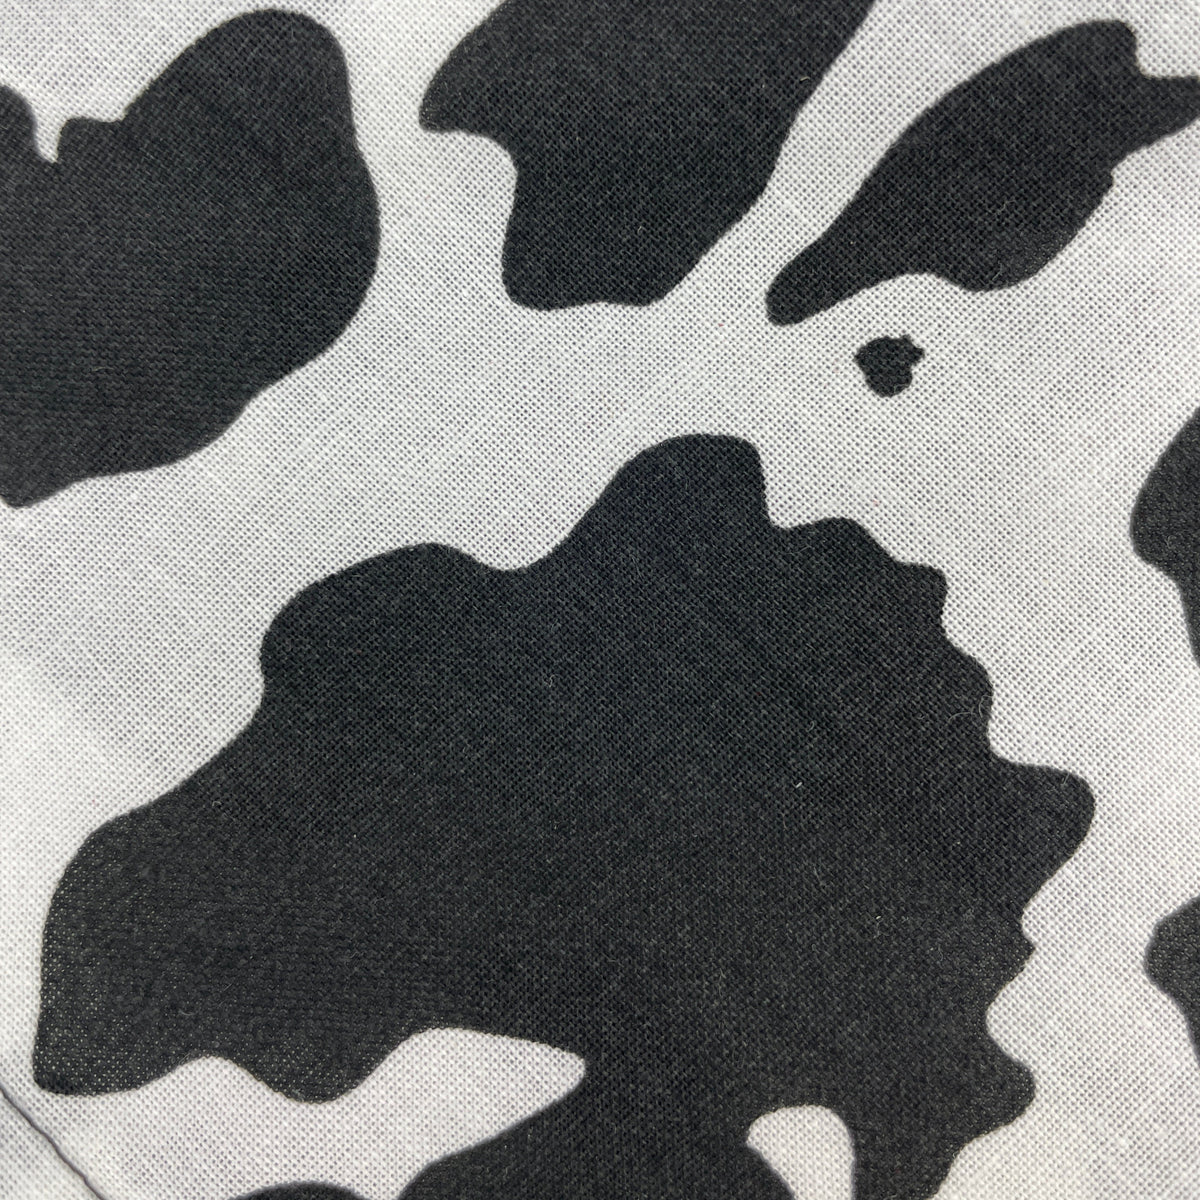 Close-up view of a cow print dog bandana